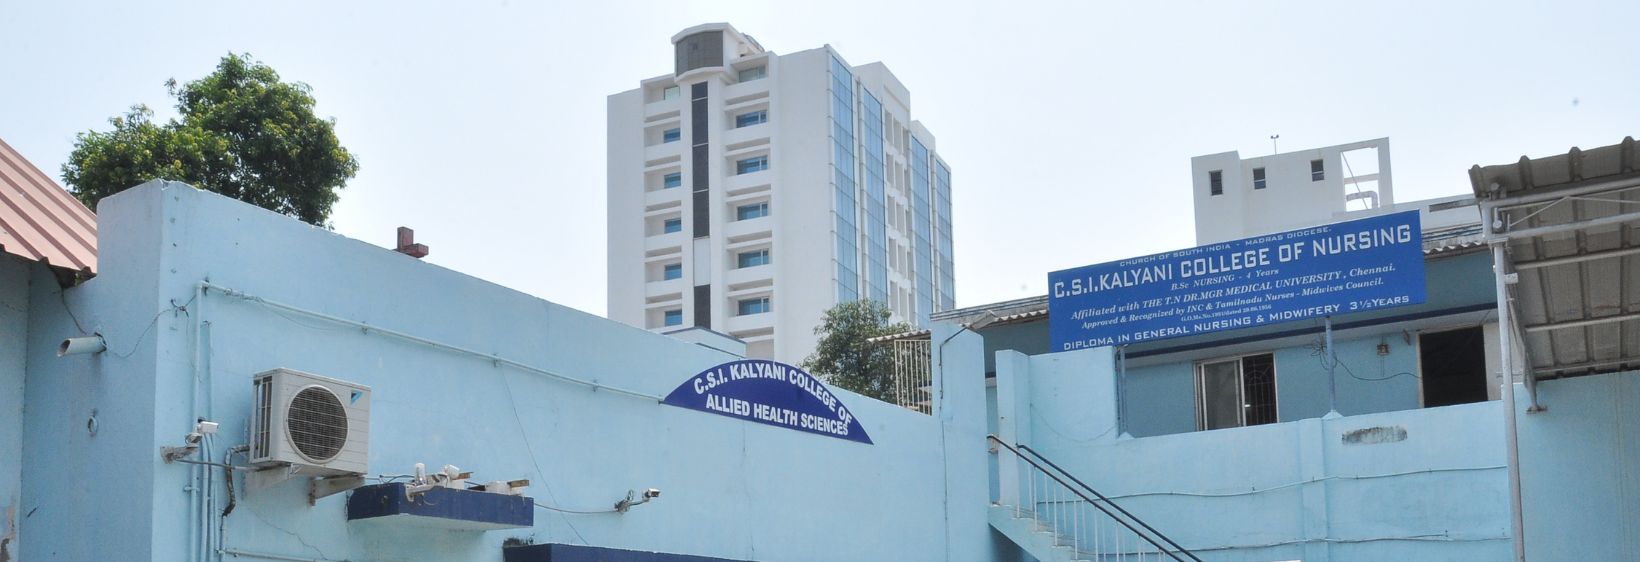 C.S.I. Kalyani College of Nursing -  Chennai